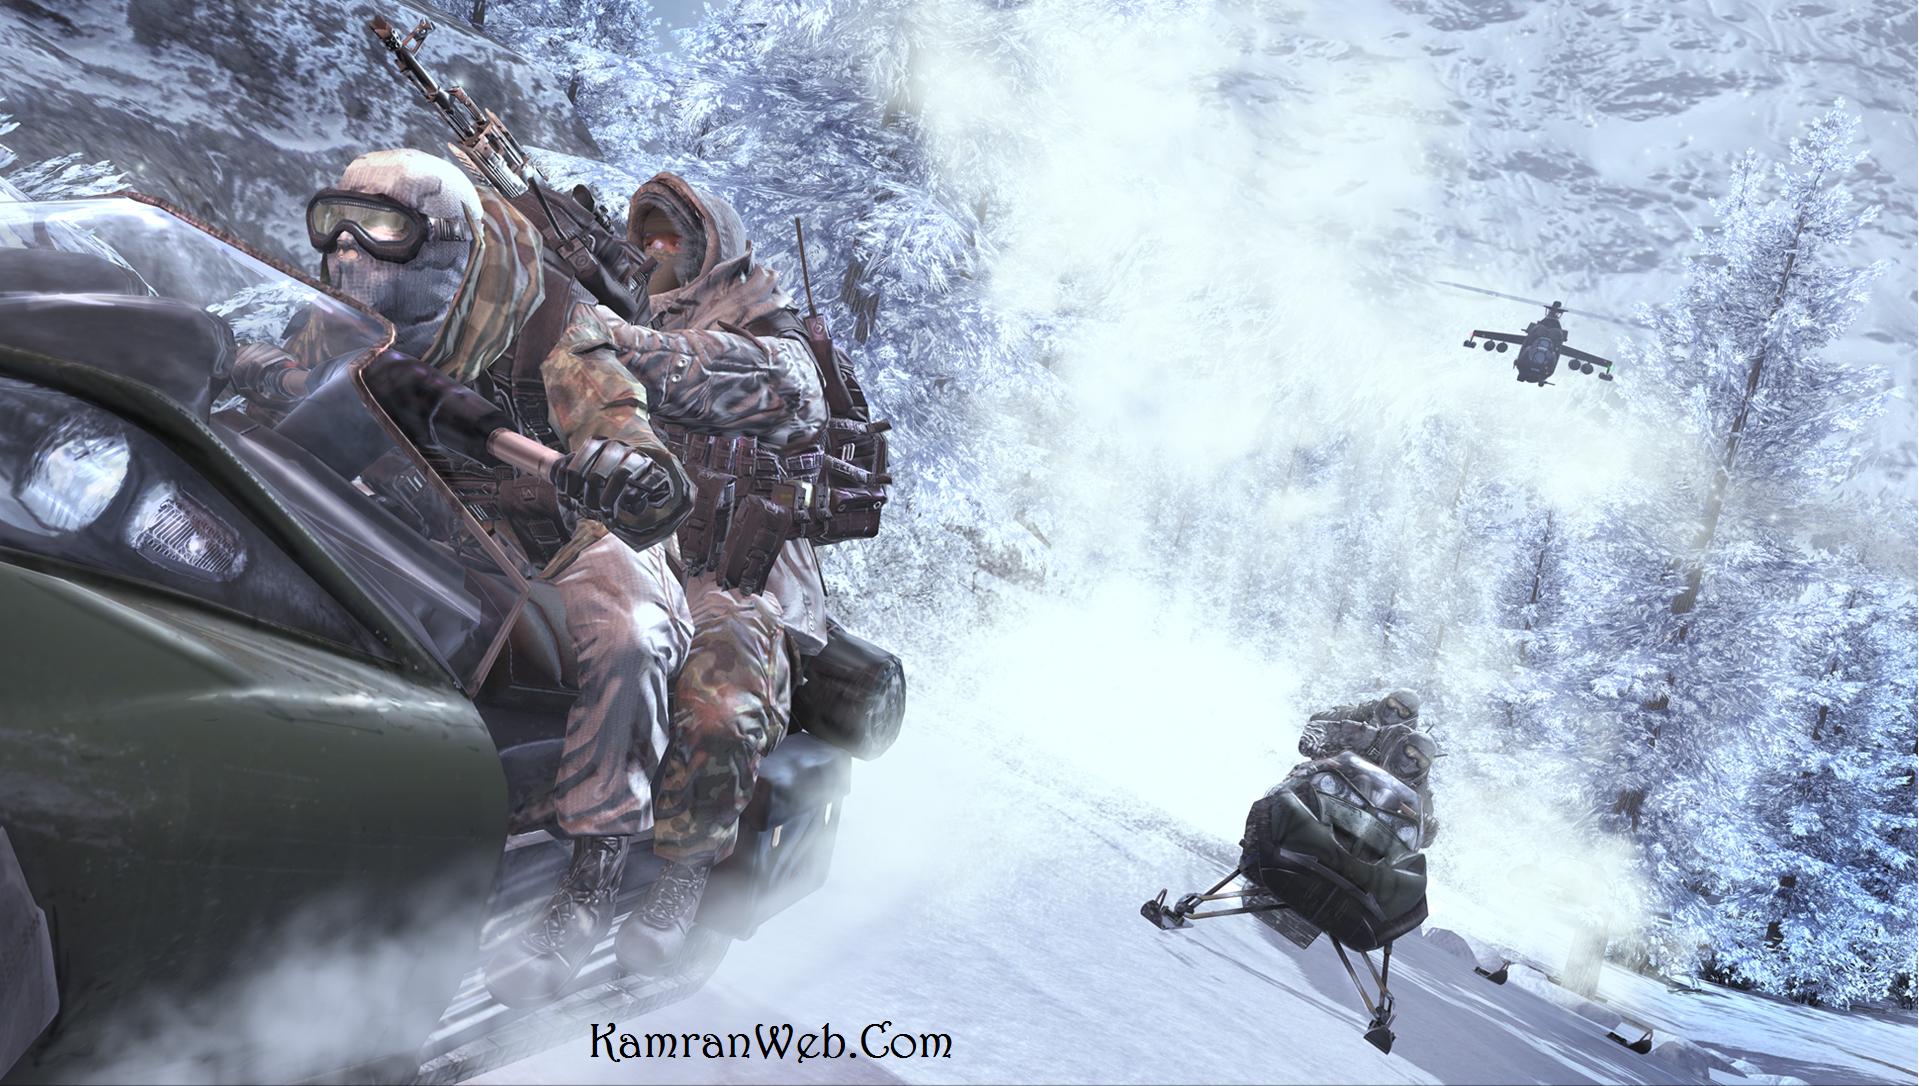 Shweta Tiwari Wallpapers Images: Call Of Duty Modern Warfare .